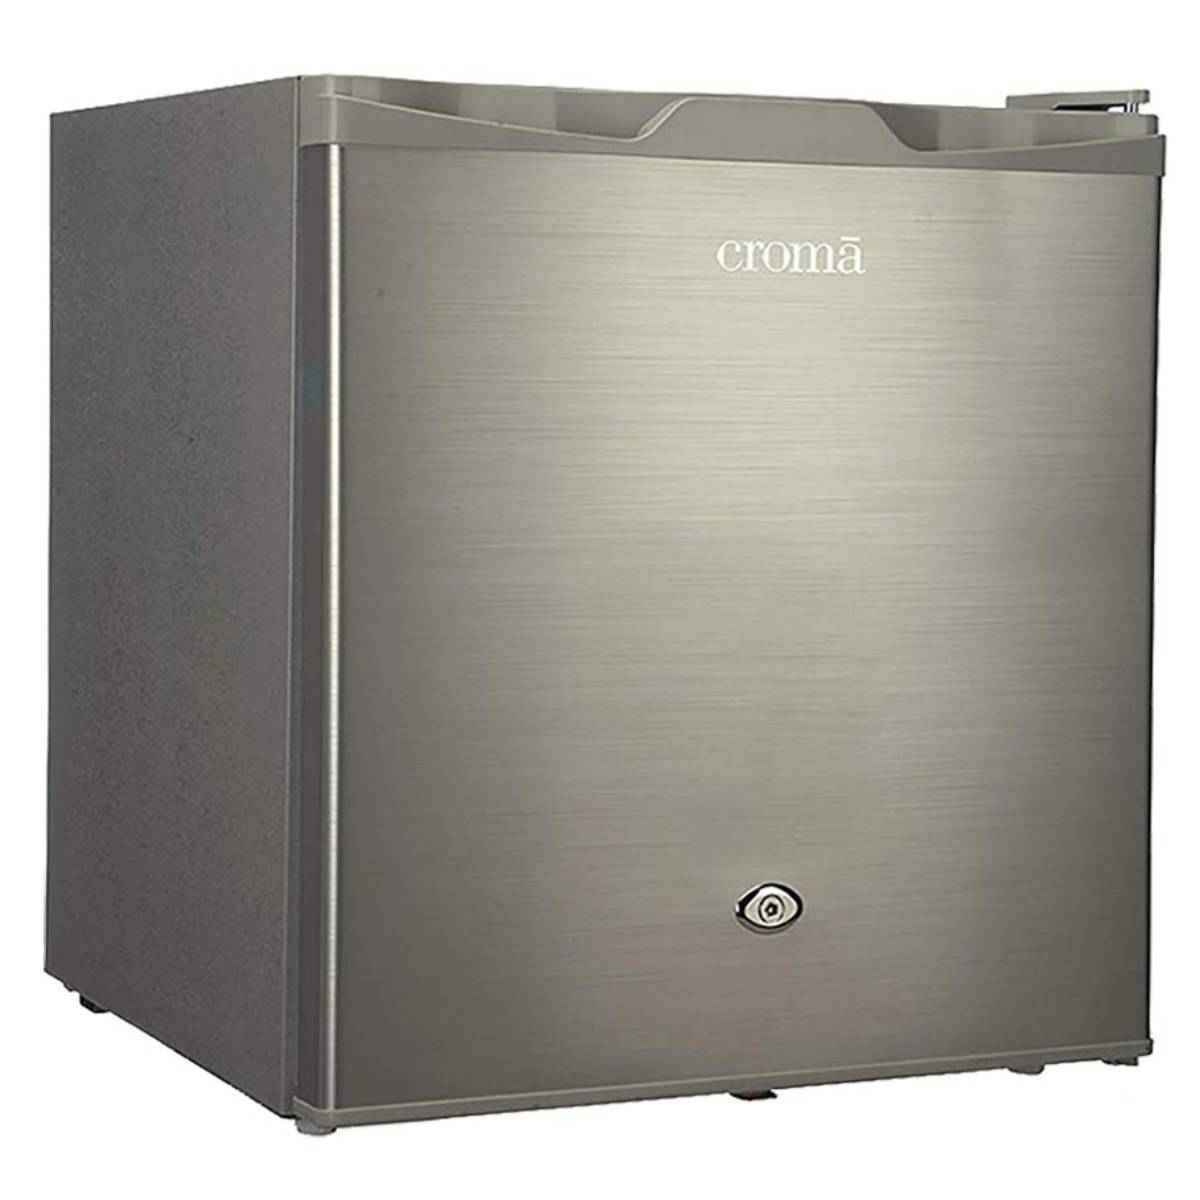 Croma 50 Liters Direct Cool Single Door Mini Refrigerator